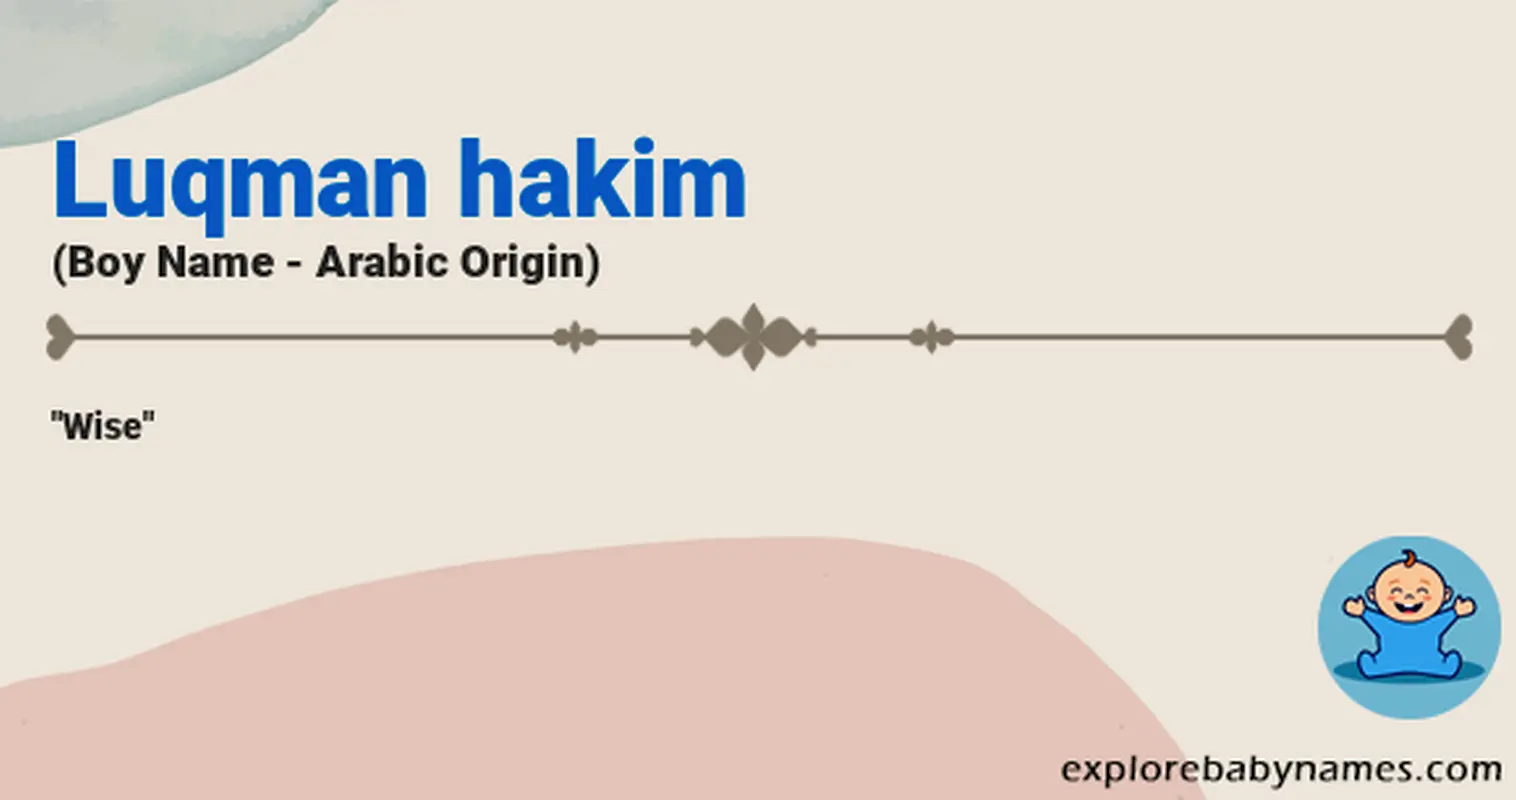 Meaning of Luqman hakim